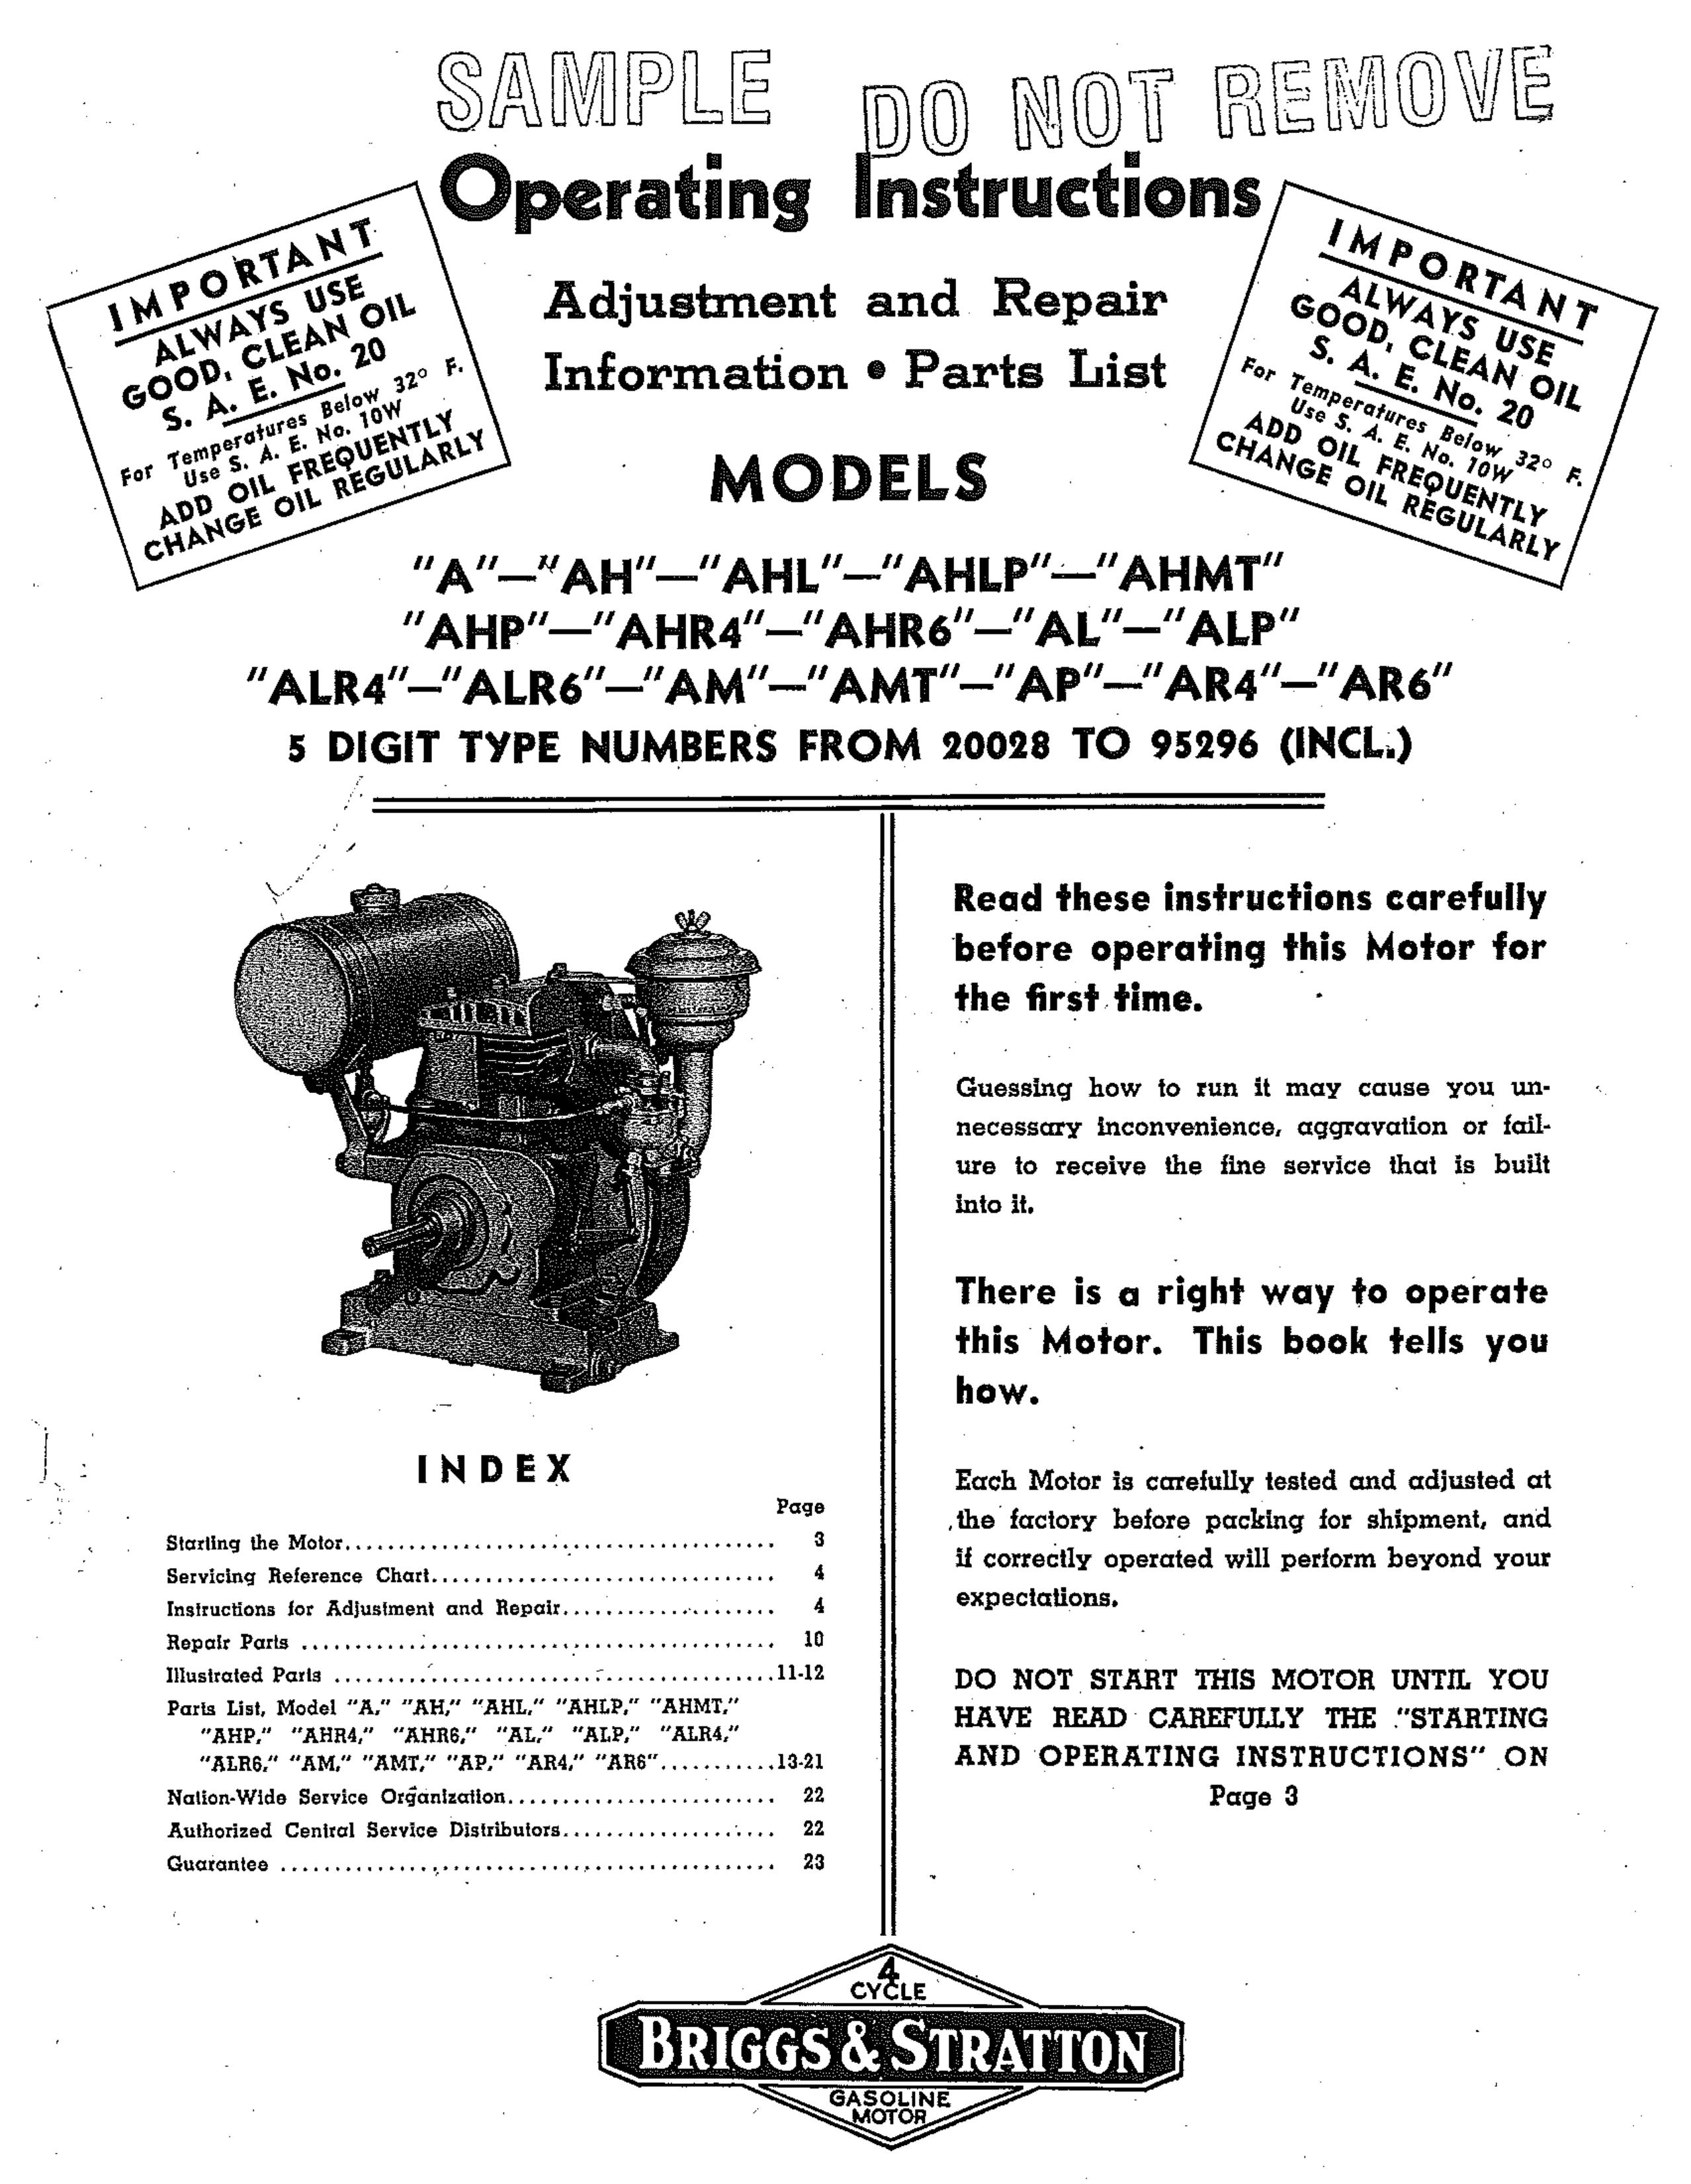 Briggs & Stratton AR6 Outboard Motor User Manual